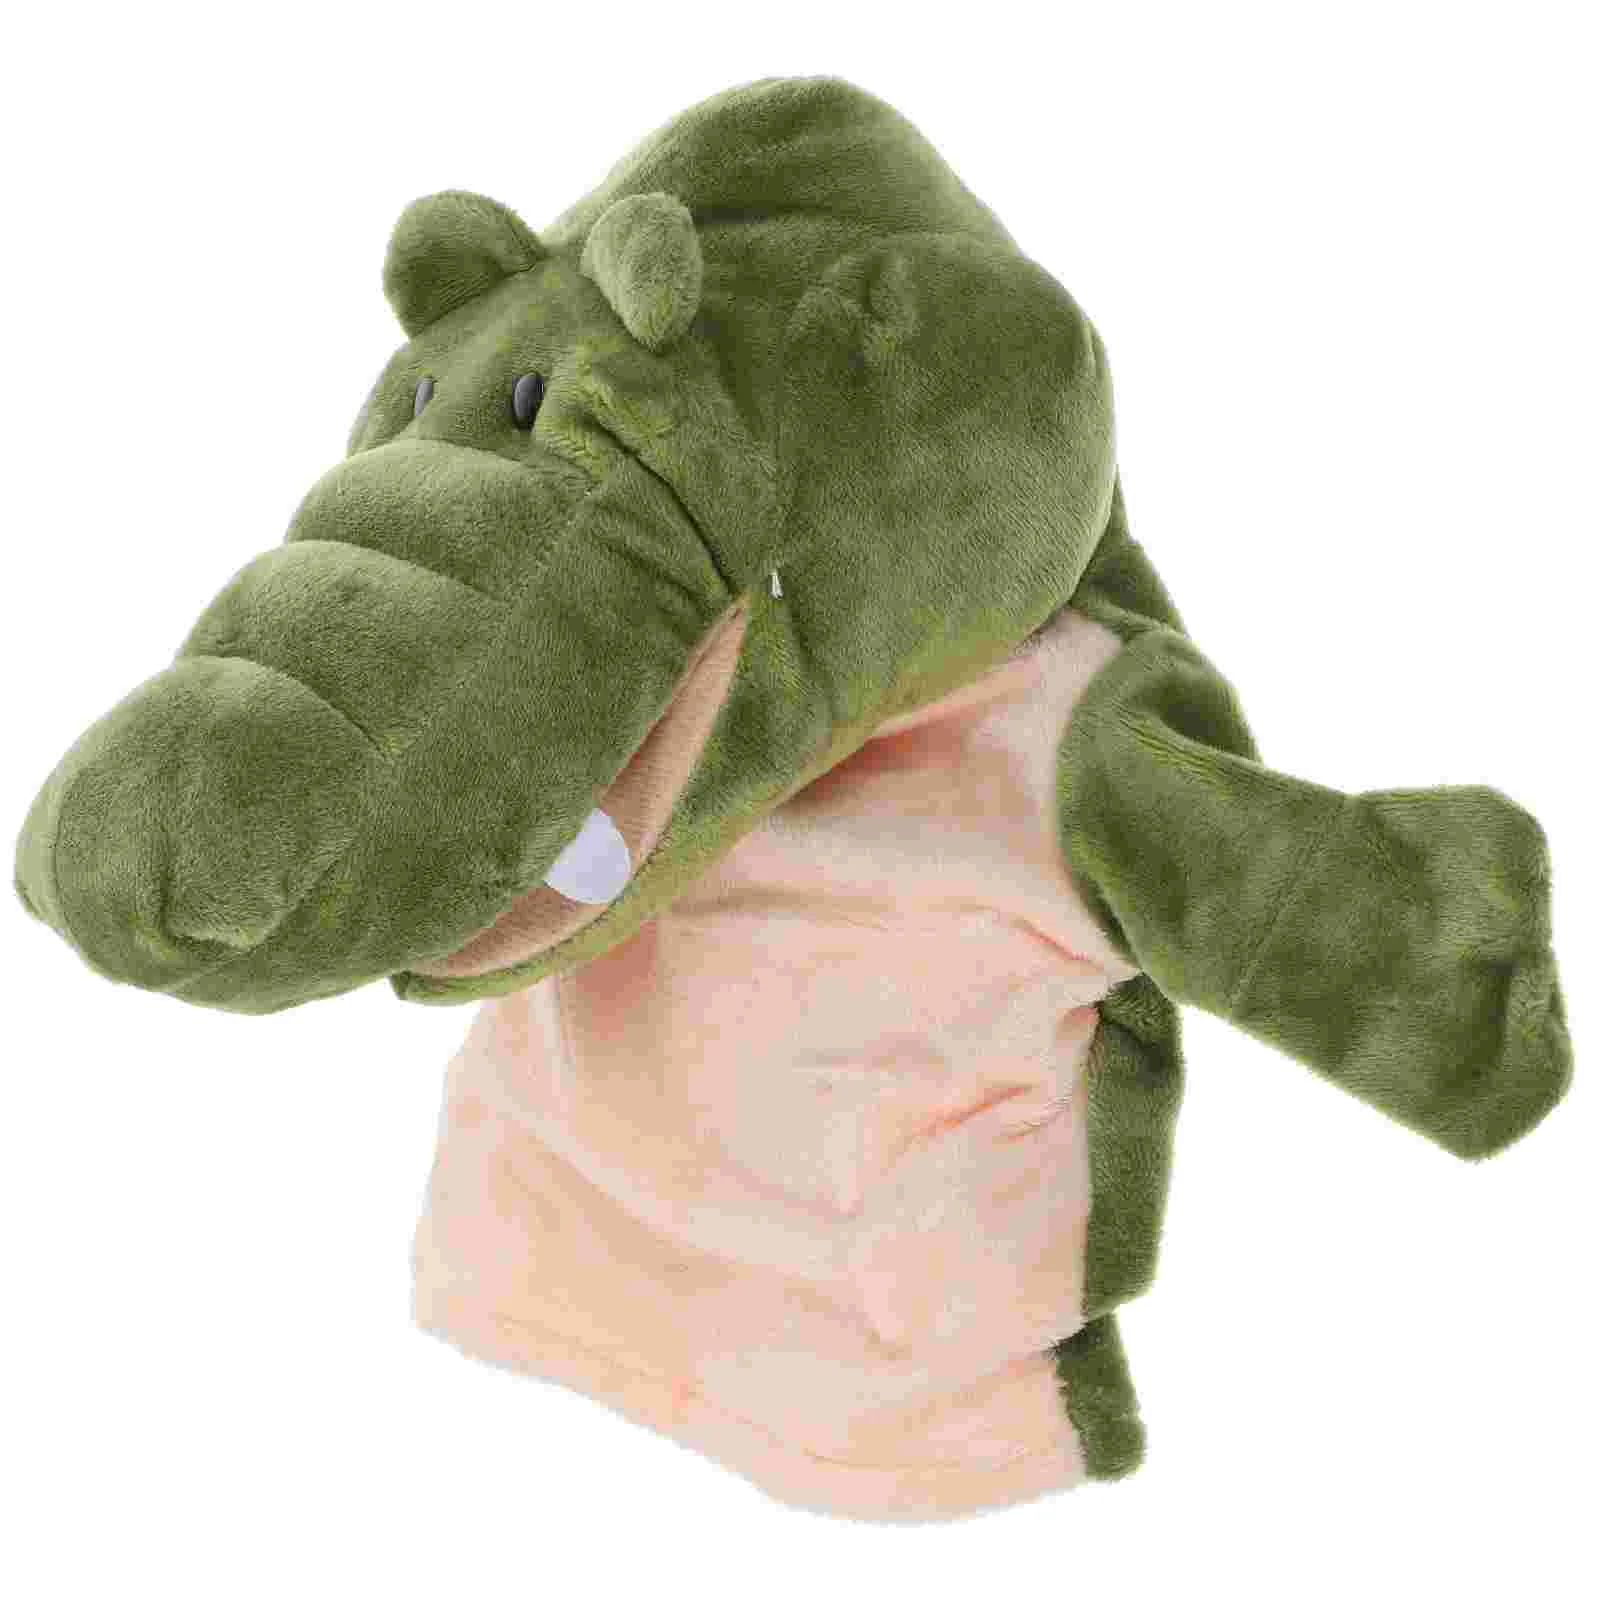 Animal Hand Kids Toys Crocodile Plush Zoo Alligator Glove Puppet Soft Storytelling Teaching Toy Preschool